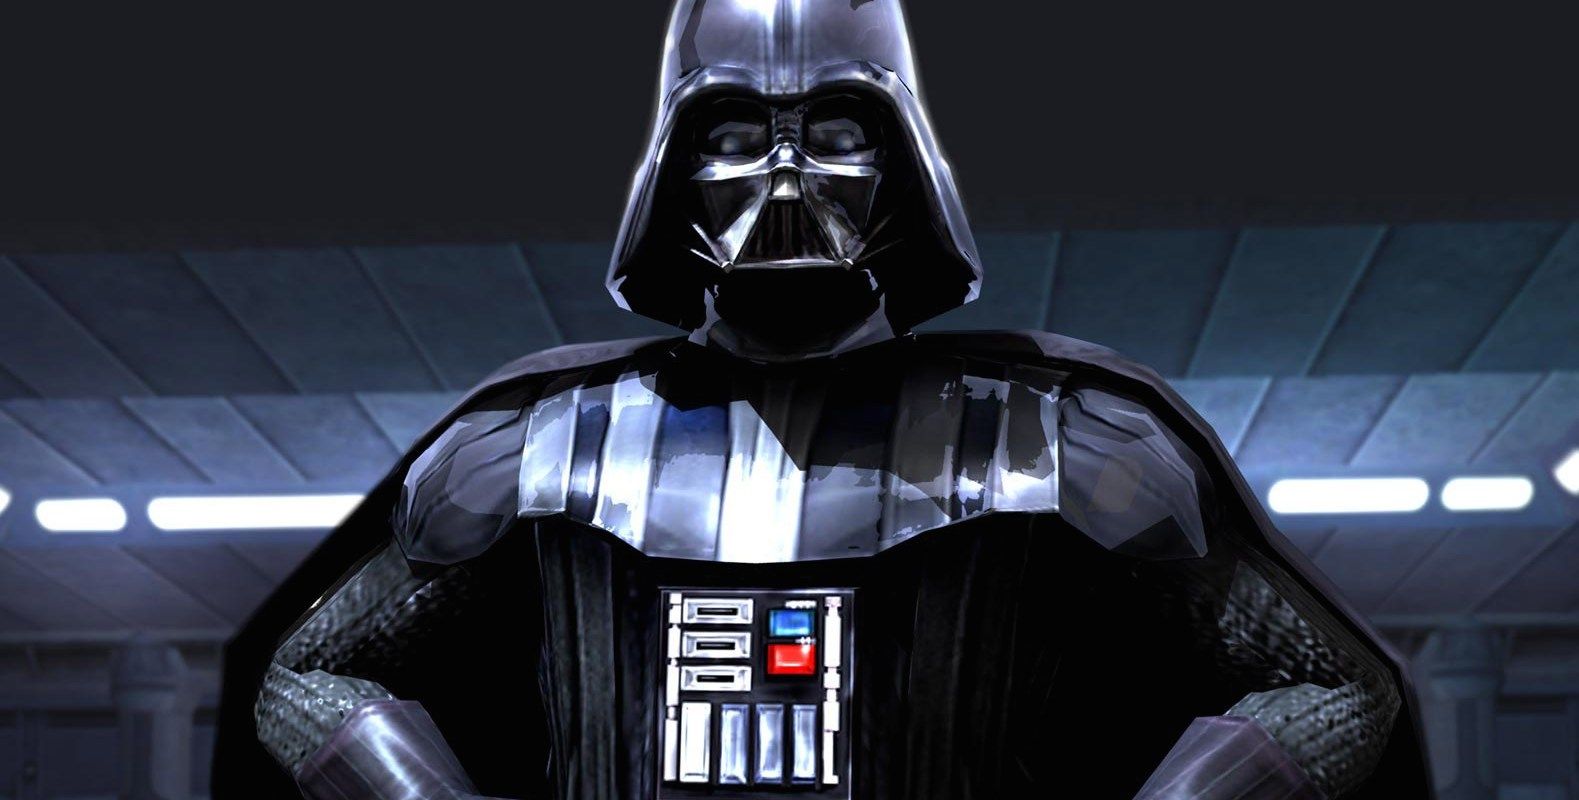 Darth Vader Chest Computer